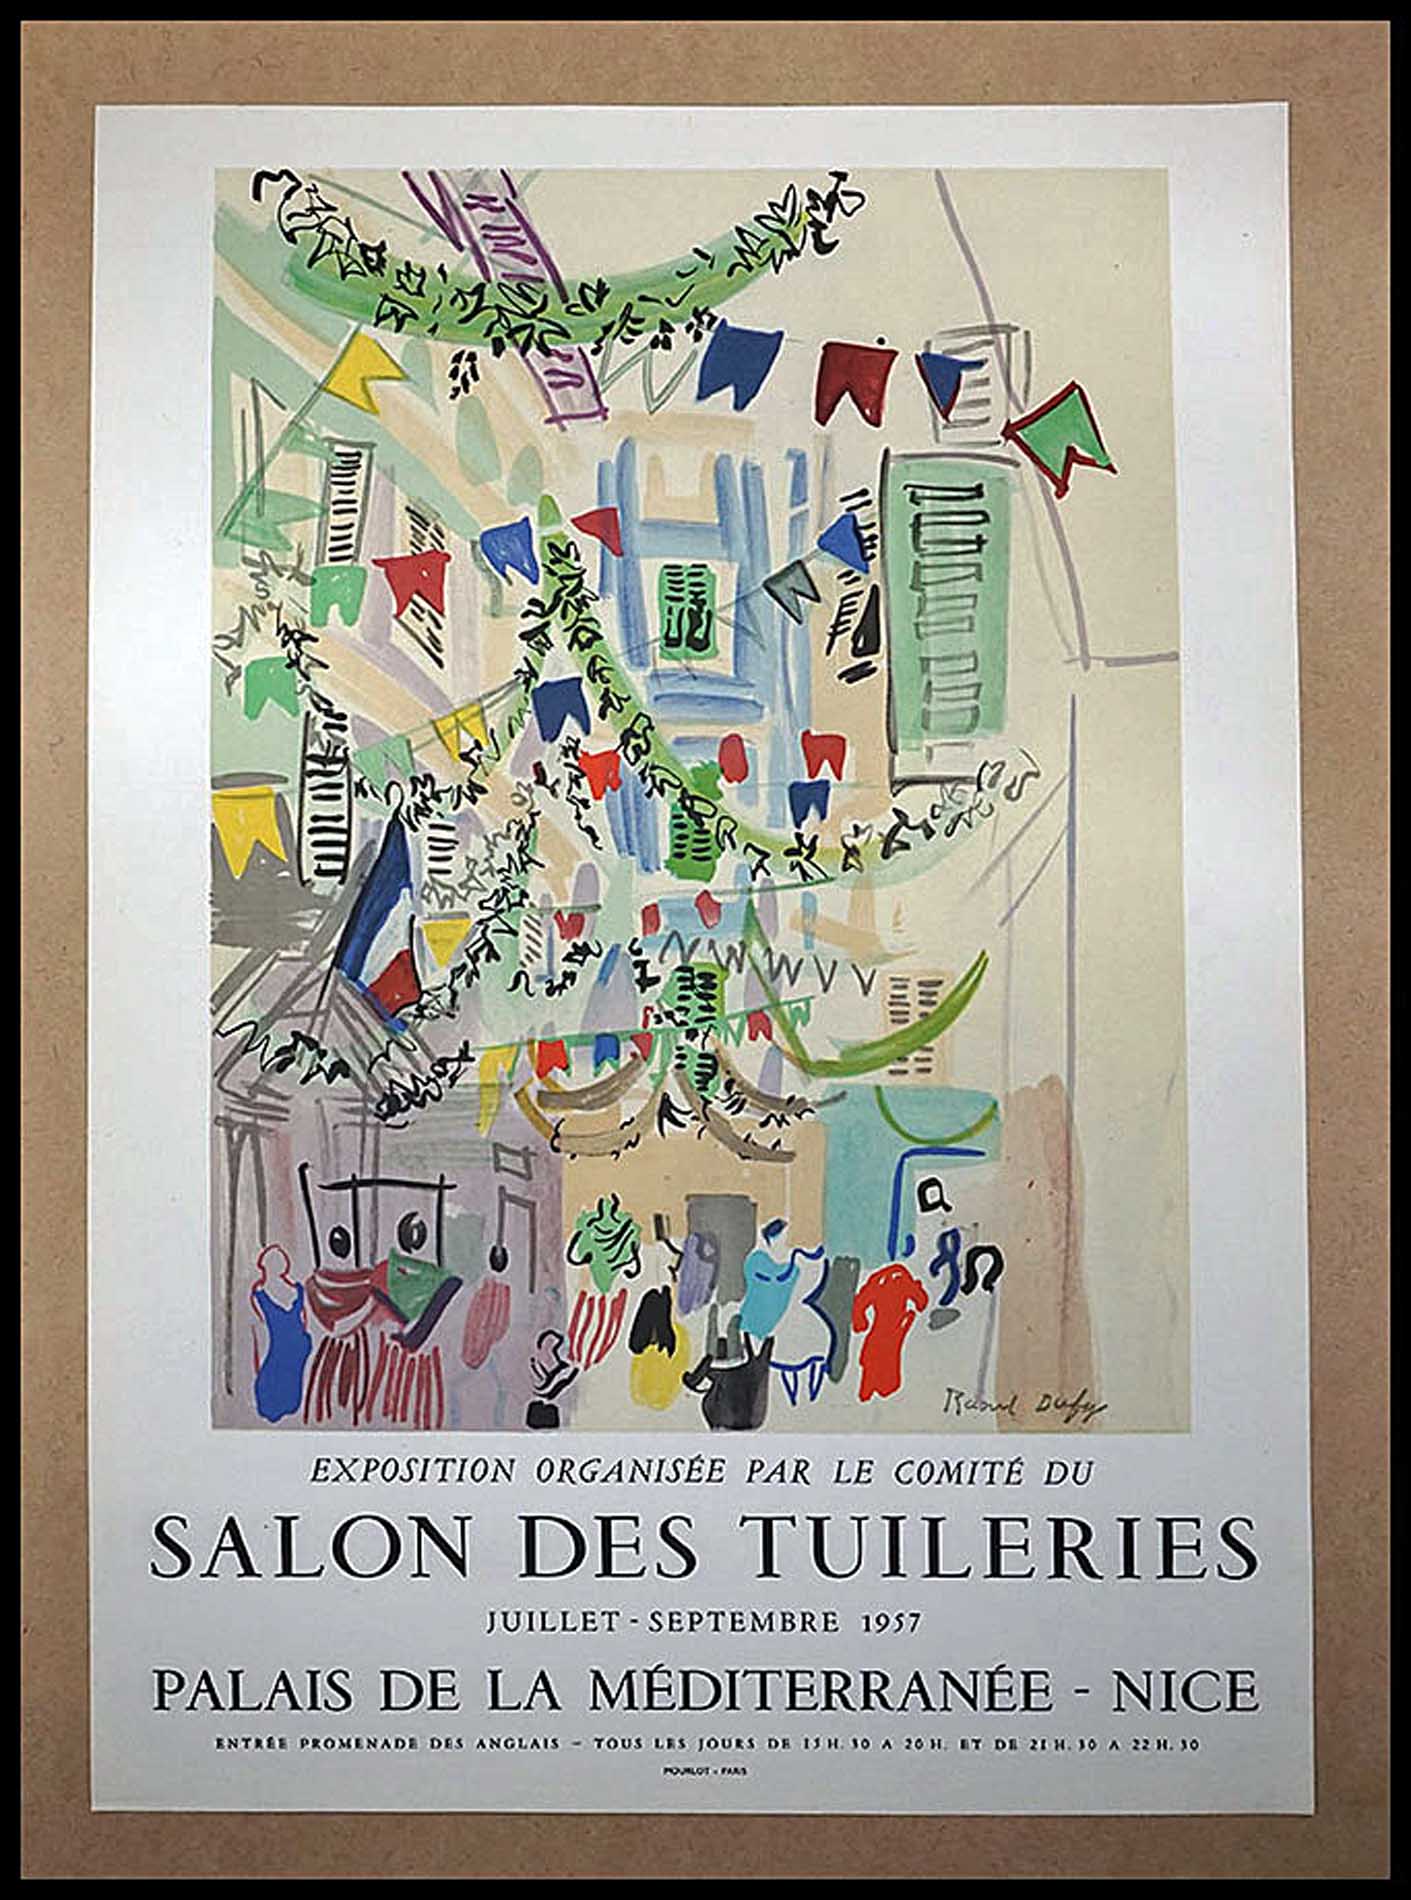 Raoul Dufy, Salon des Tuileries, palais de la Mediterranee, Nice